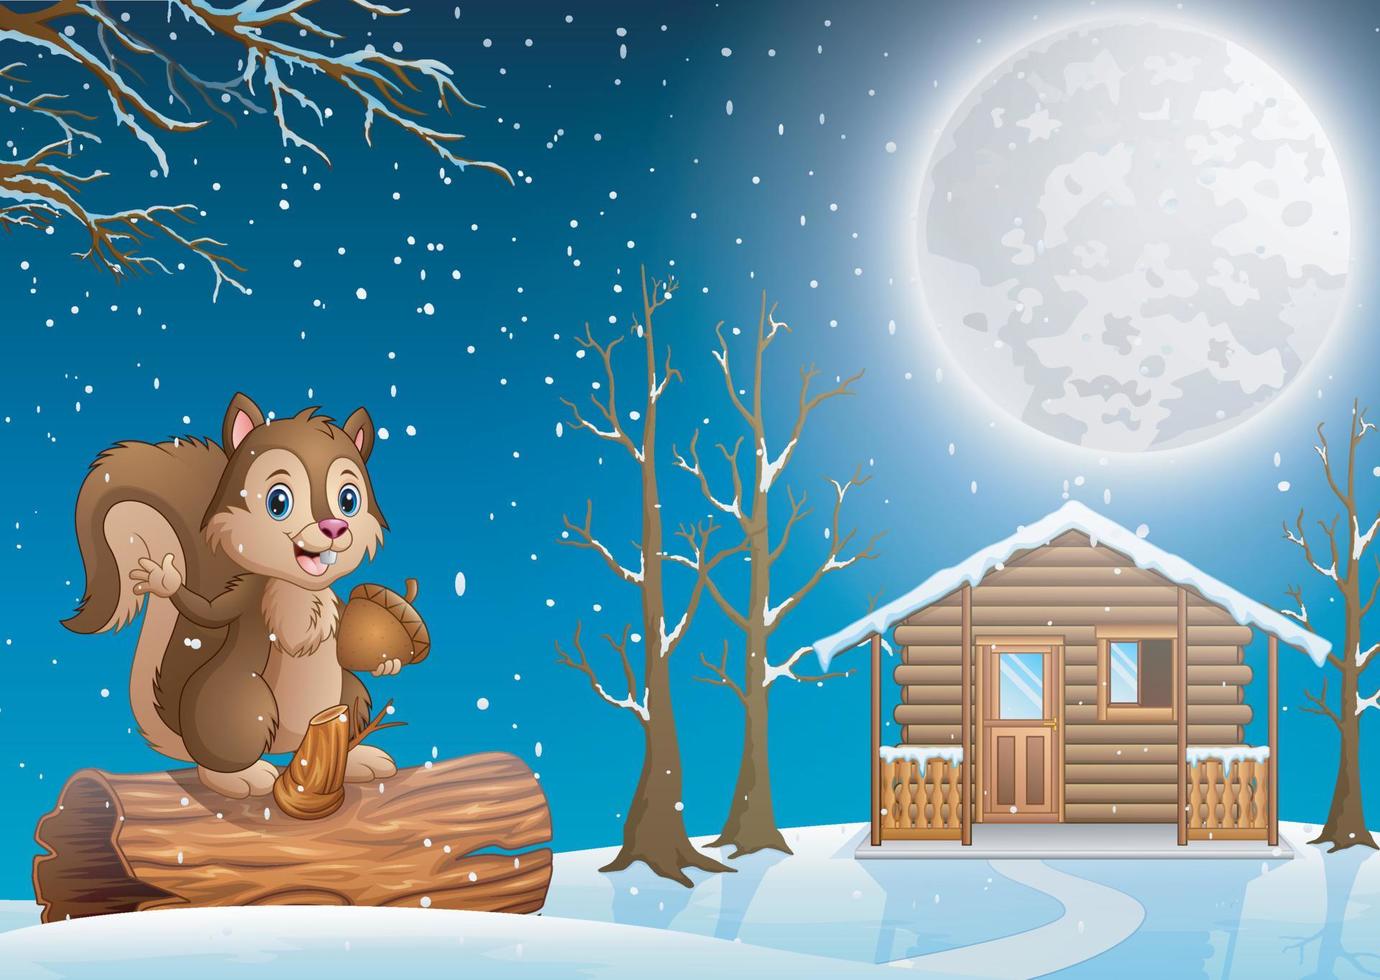 A squirrel cartoon enjoying snowfall in snowy village vector